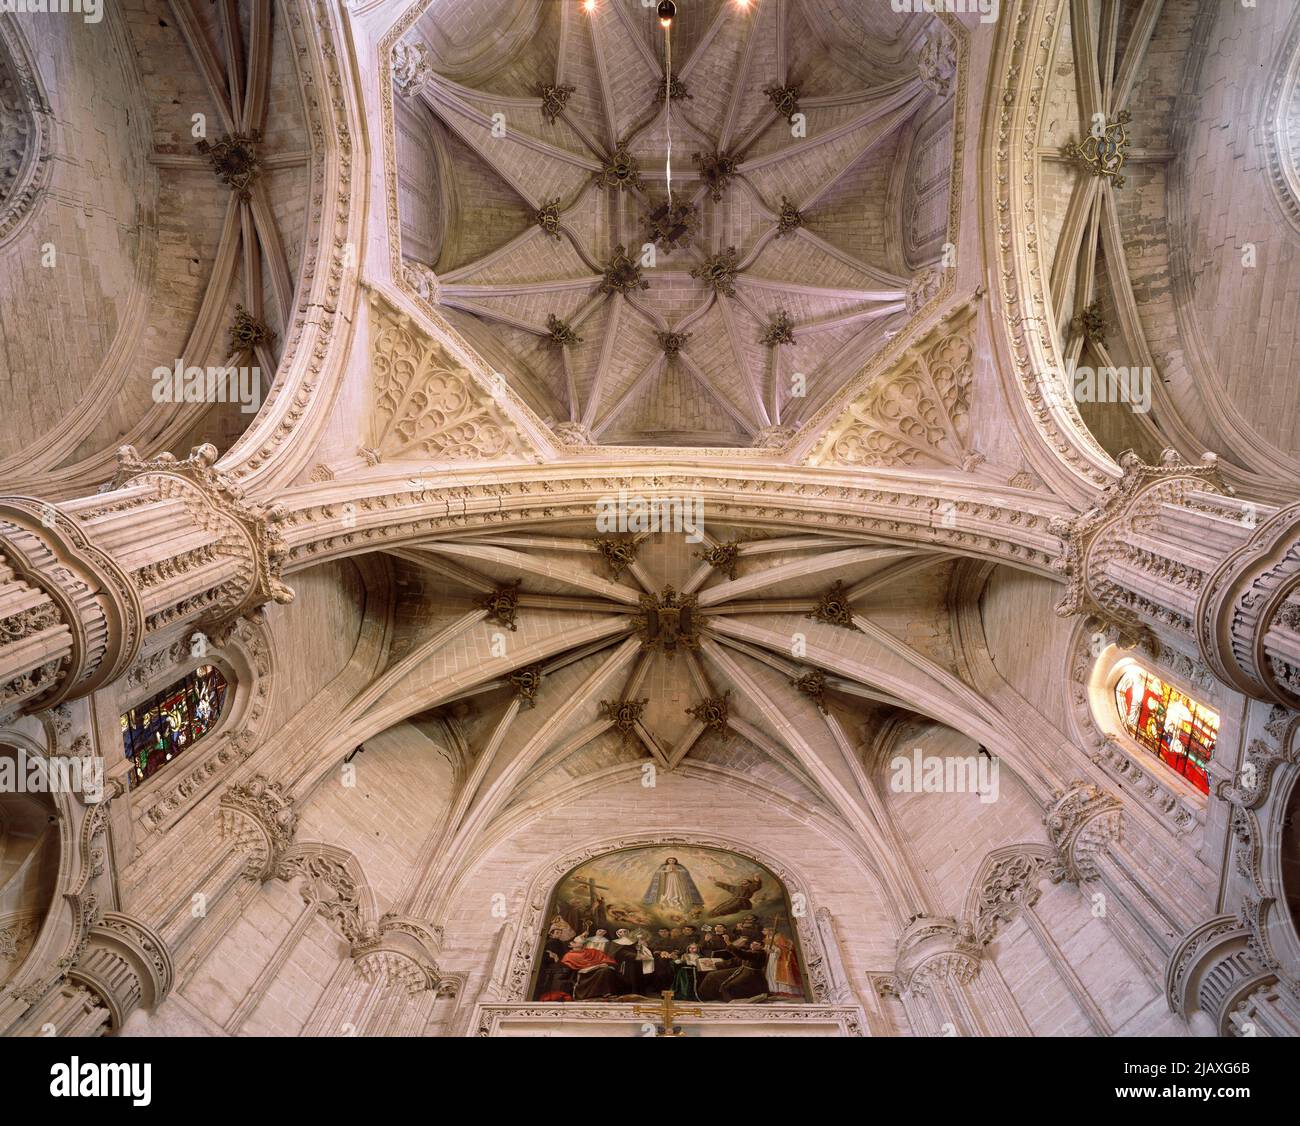 Toledo, Kloster San Juan de los Reyes, im Gewölbe Chor Foto de stock